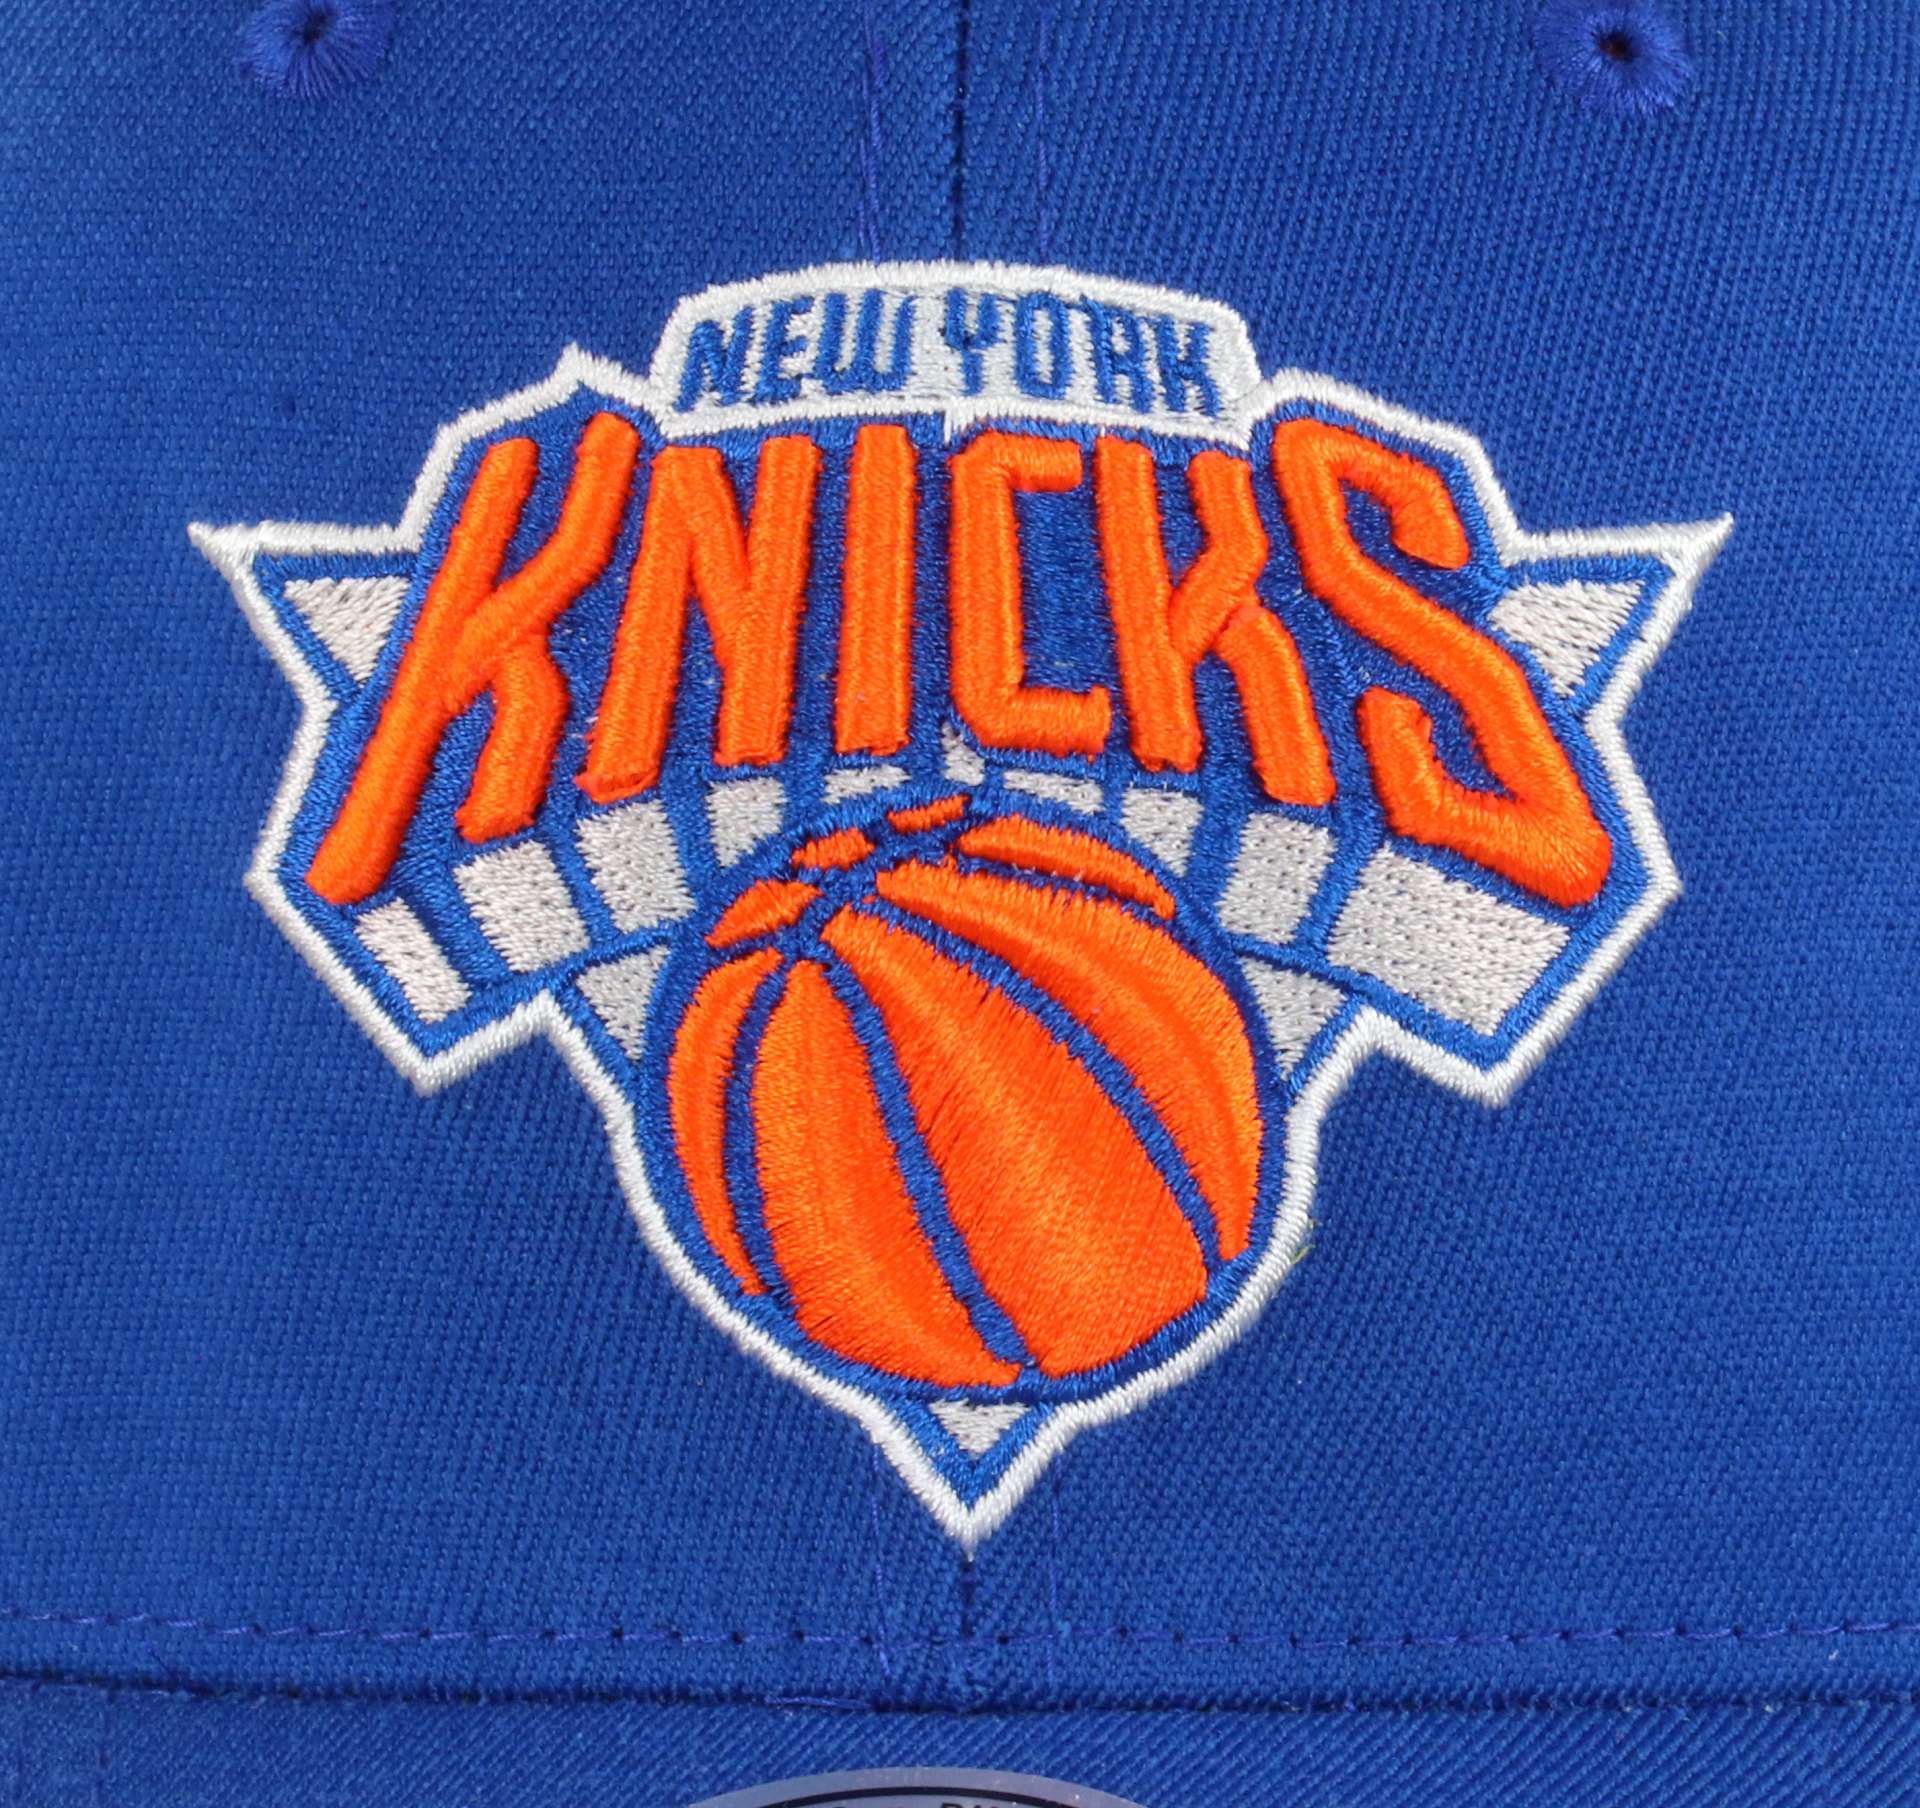 New York Knicks Royal NBA Team Ground Stretch Snapback Cap Mitchell & Ness